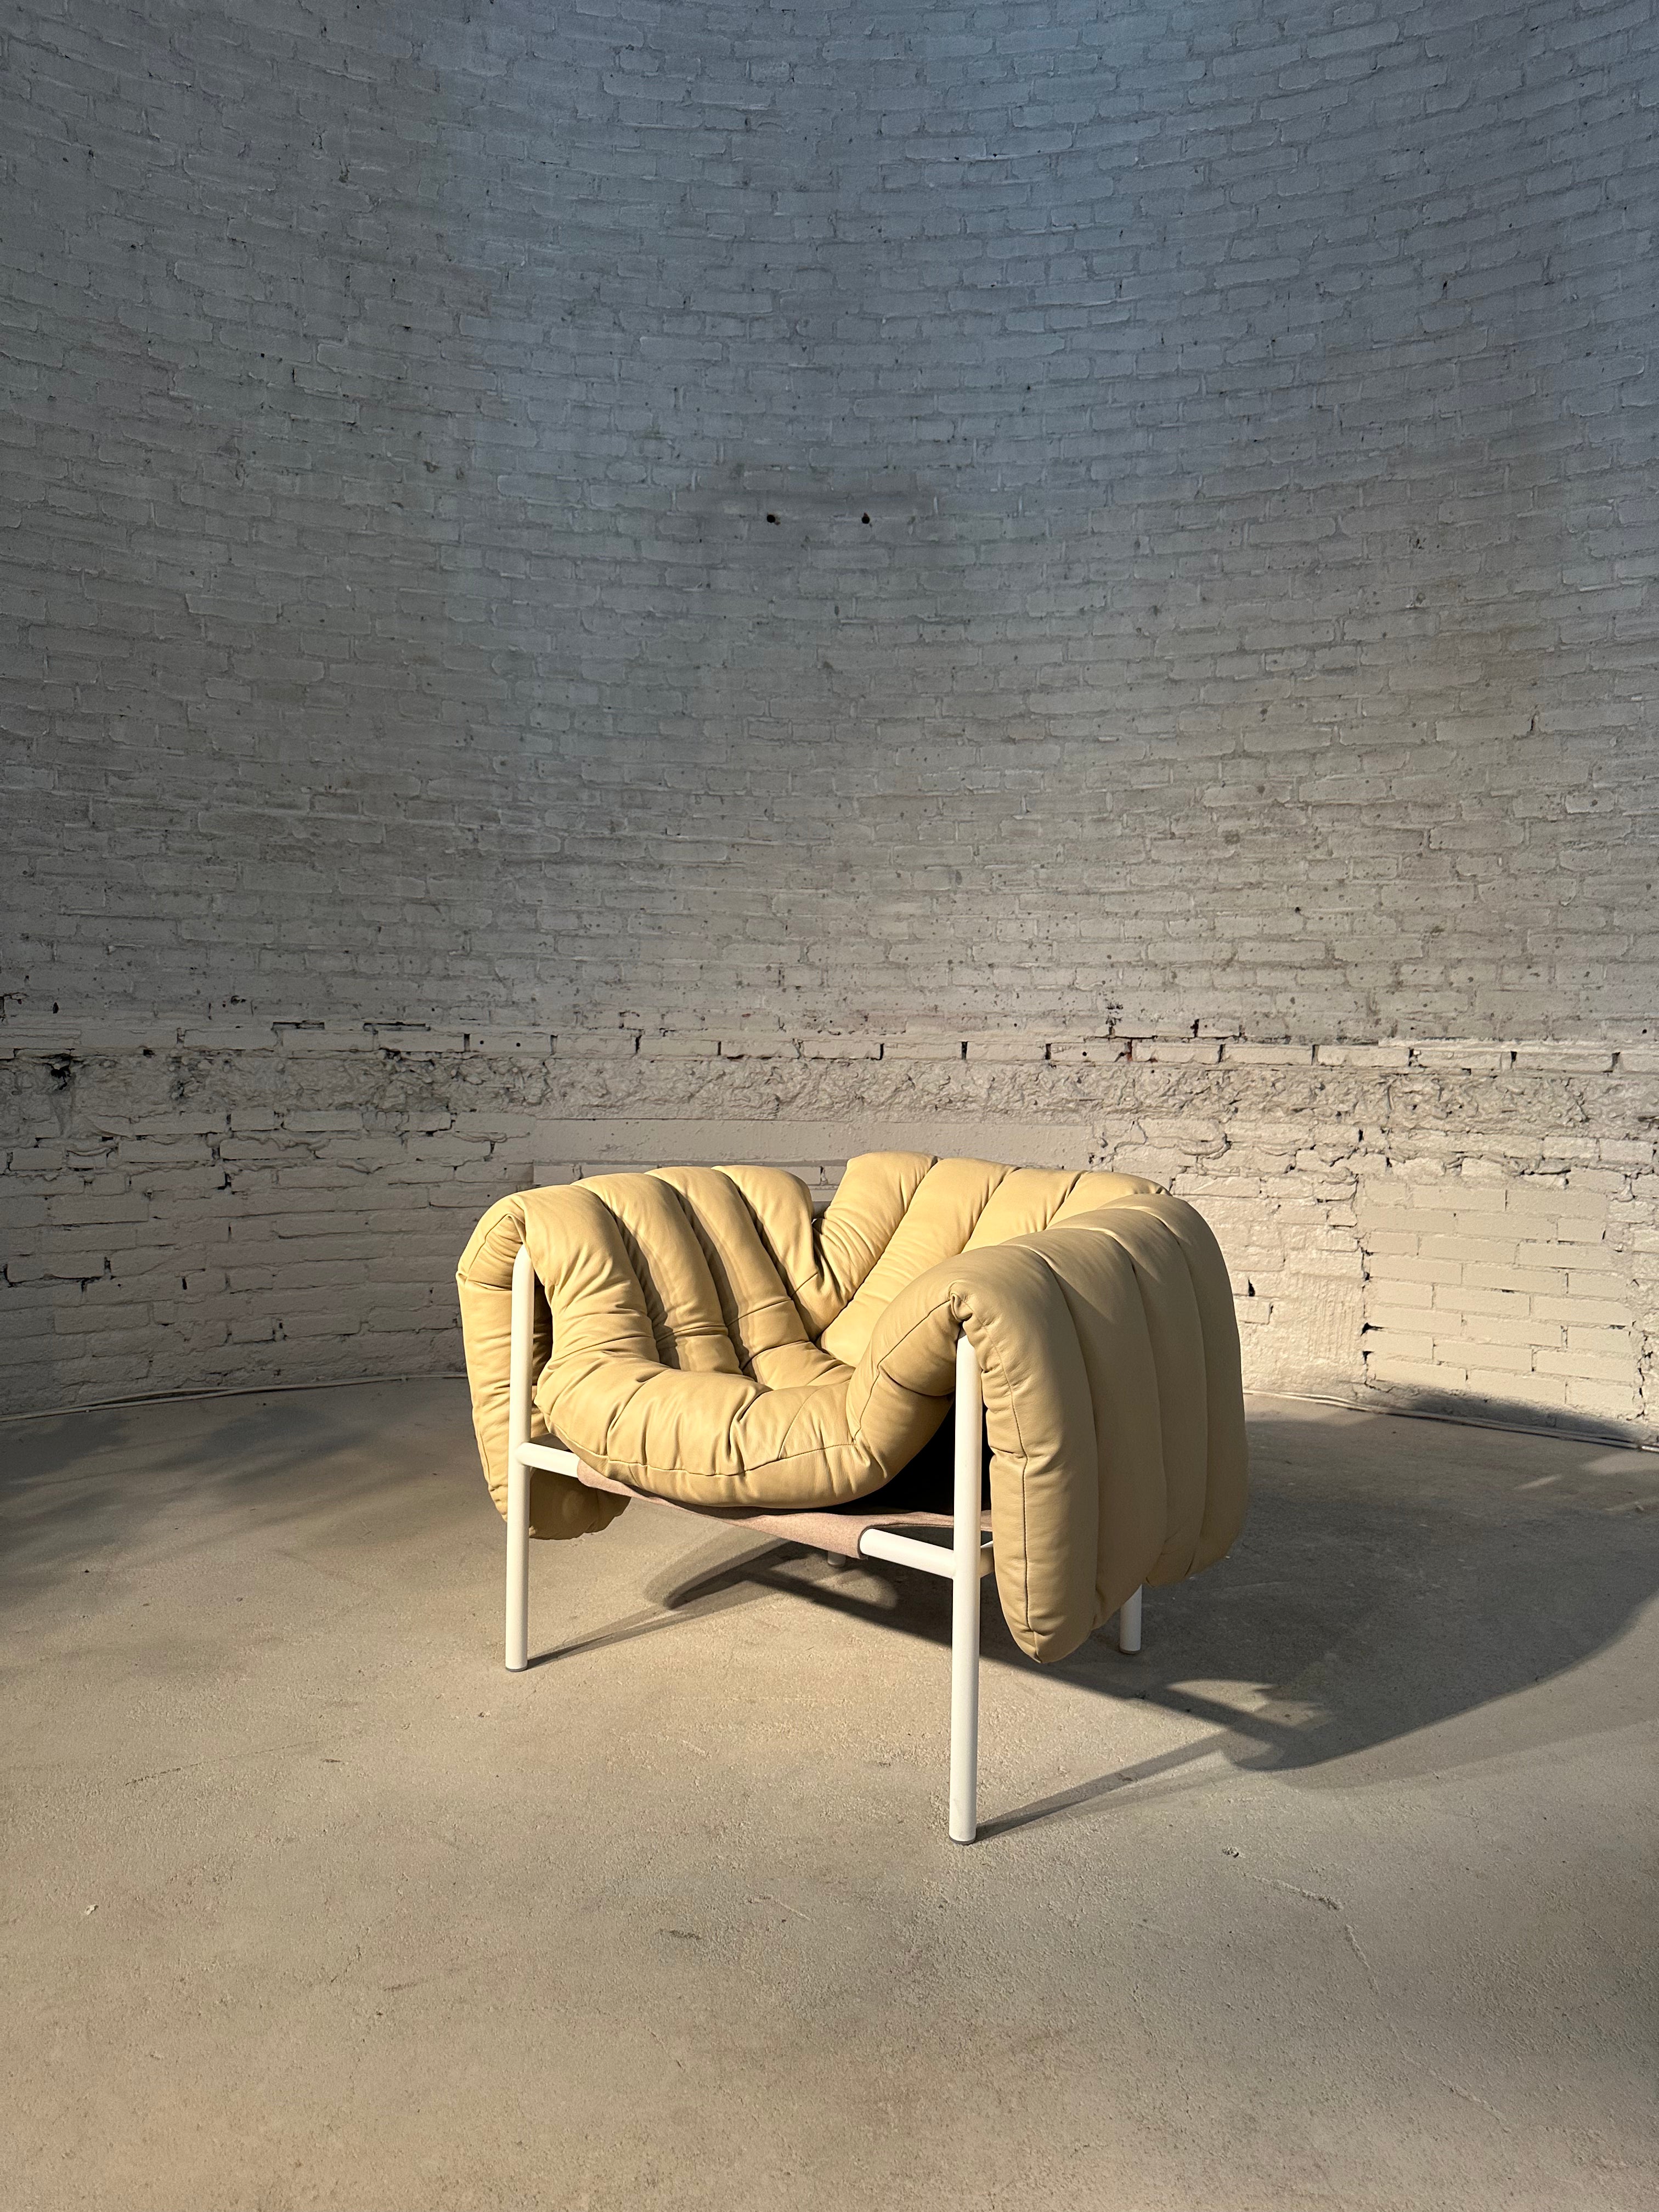 Puffy lounge chair by Faye Toogood